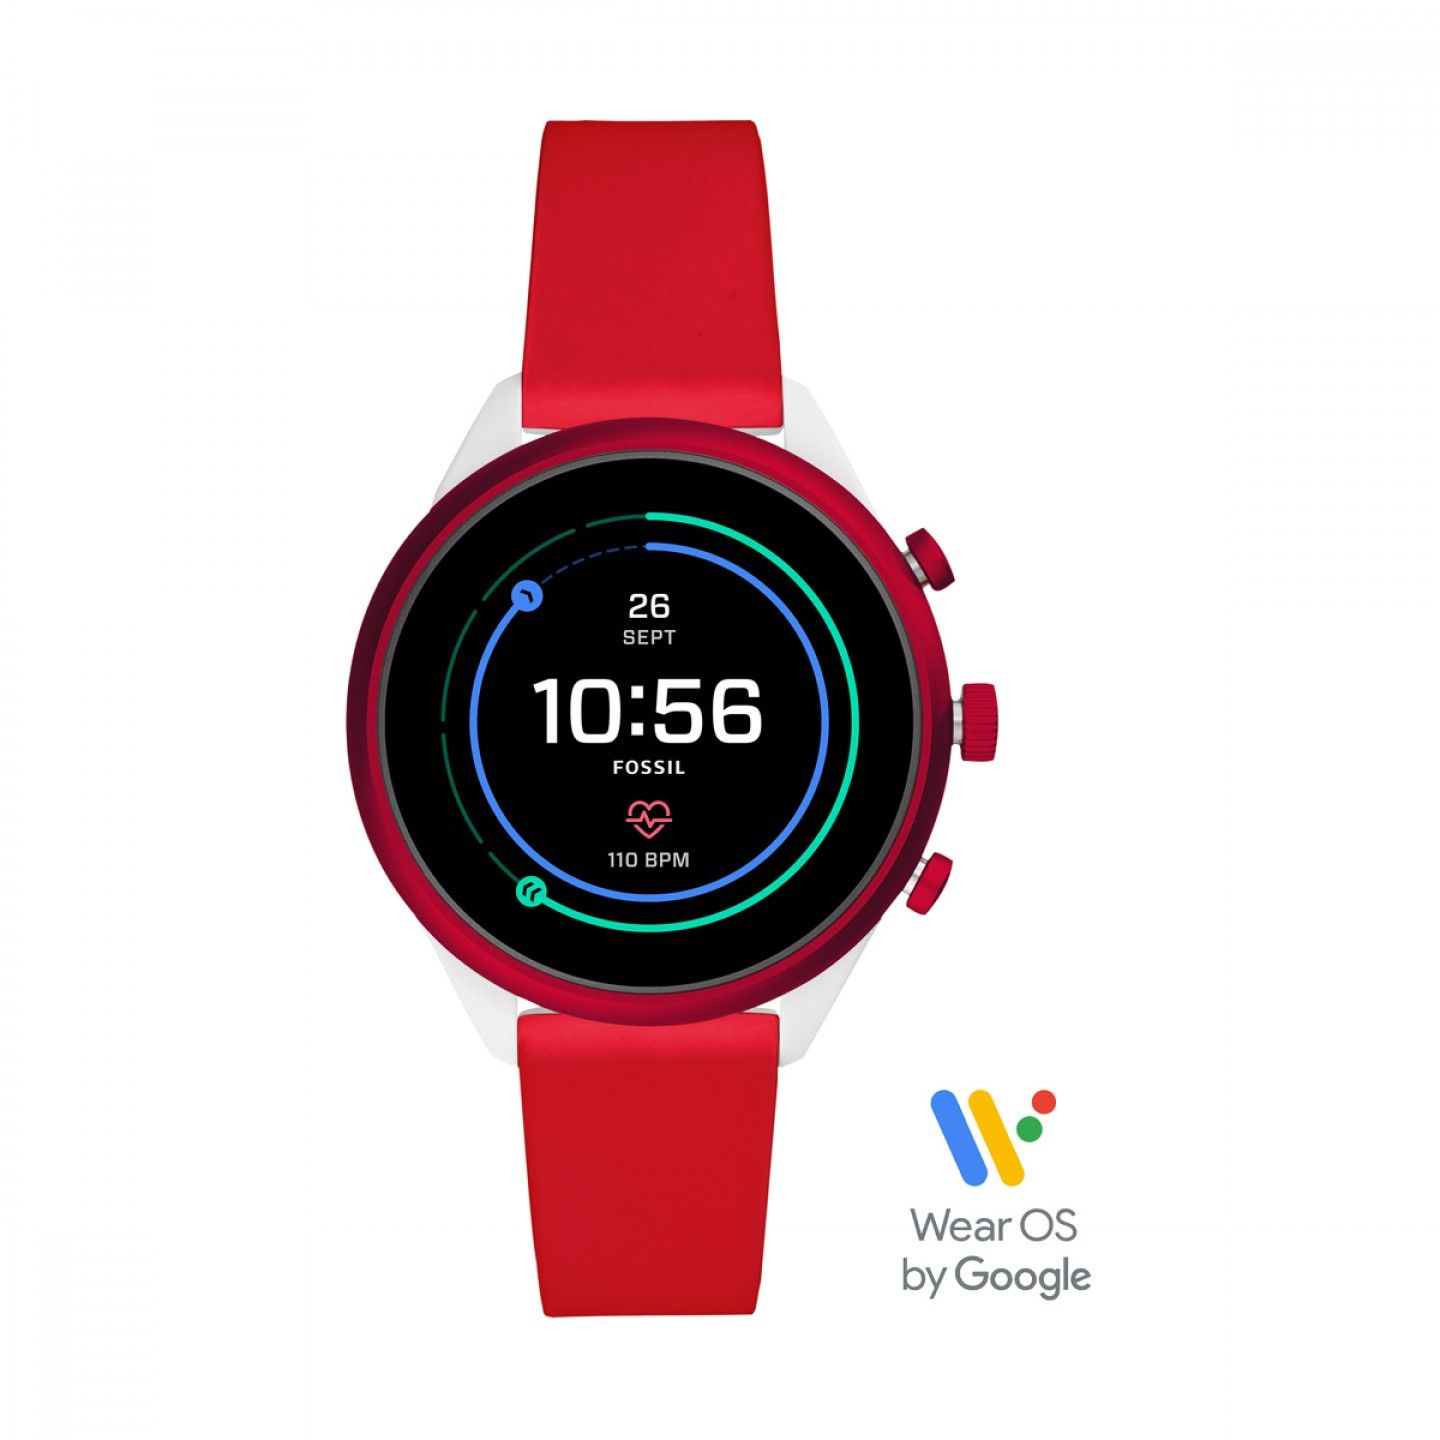 Relógio FOSSIL Q Sport Red (Smartwatch)